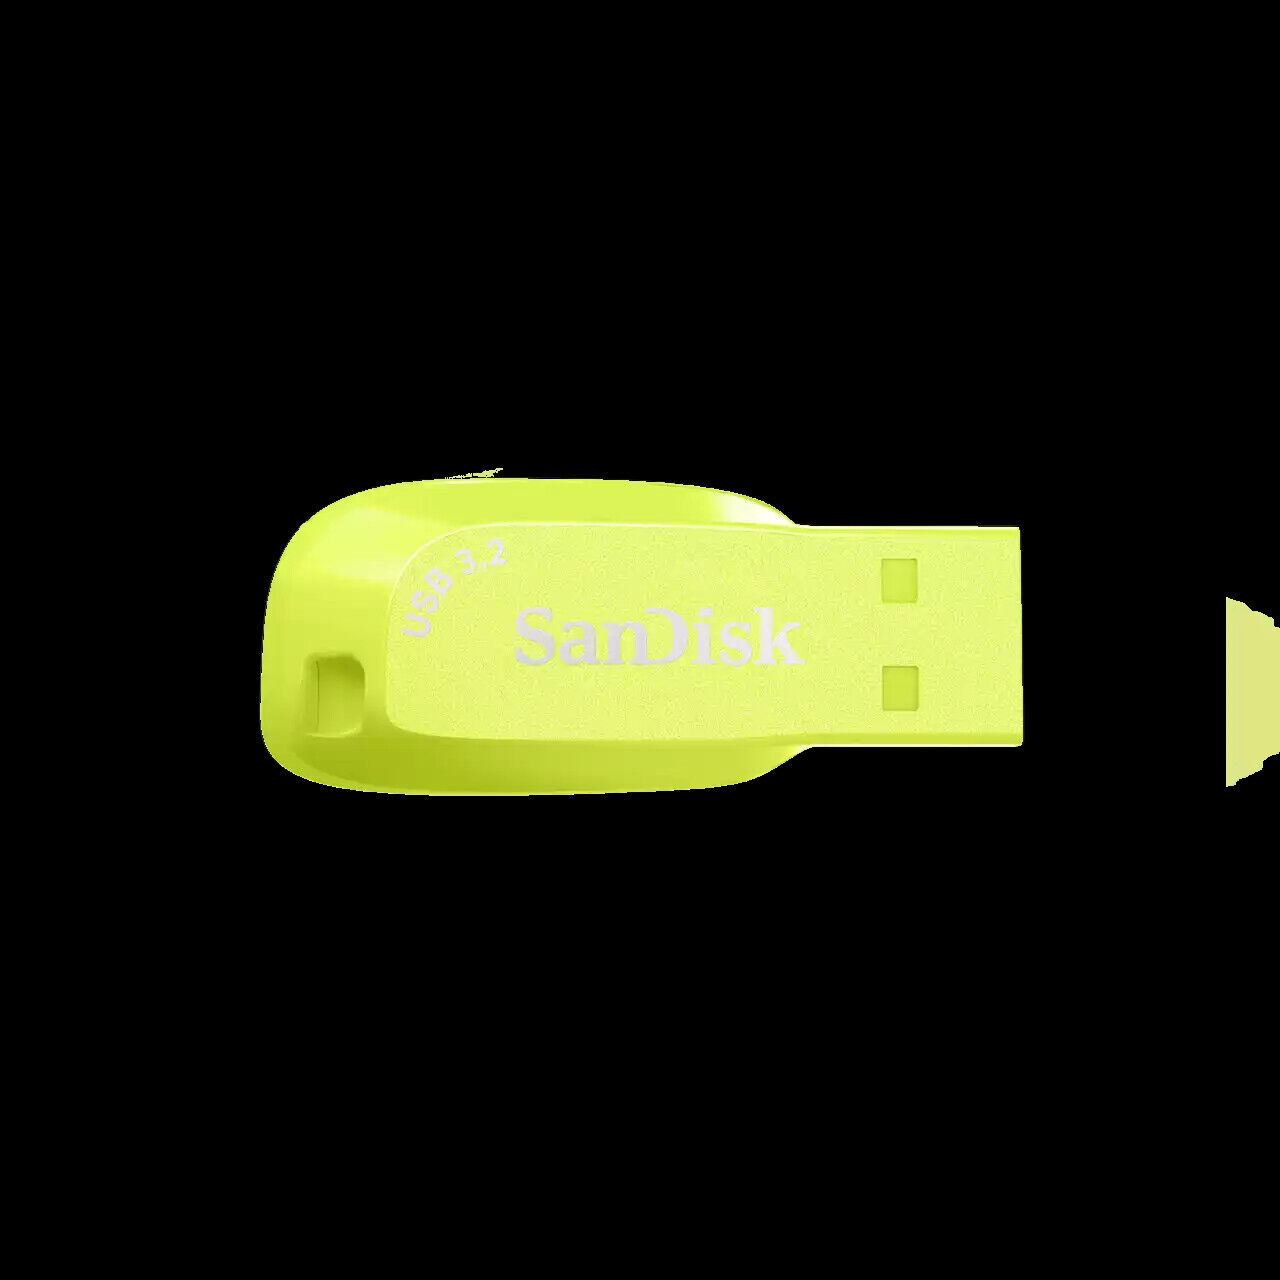 SanDisk 512GB Ultra Shift USB 3.2 Gen 1 Flash Drive, Yellow - SDCZ410-512G-G46EP